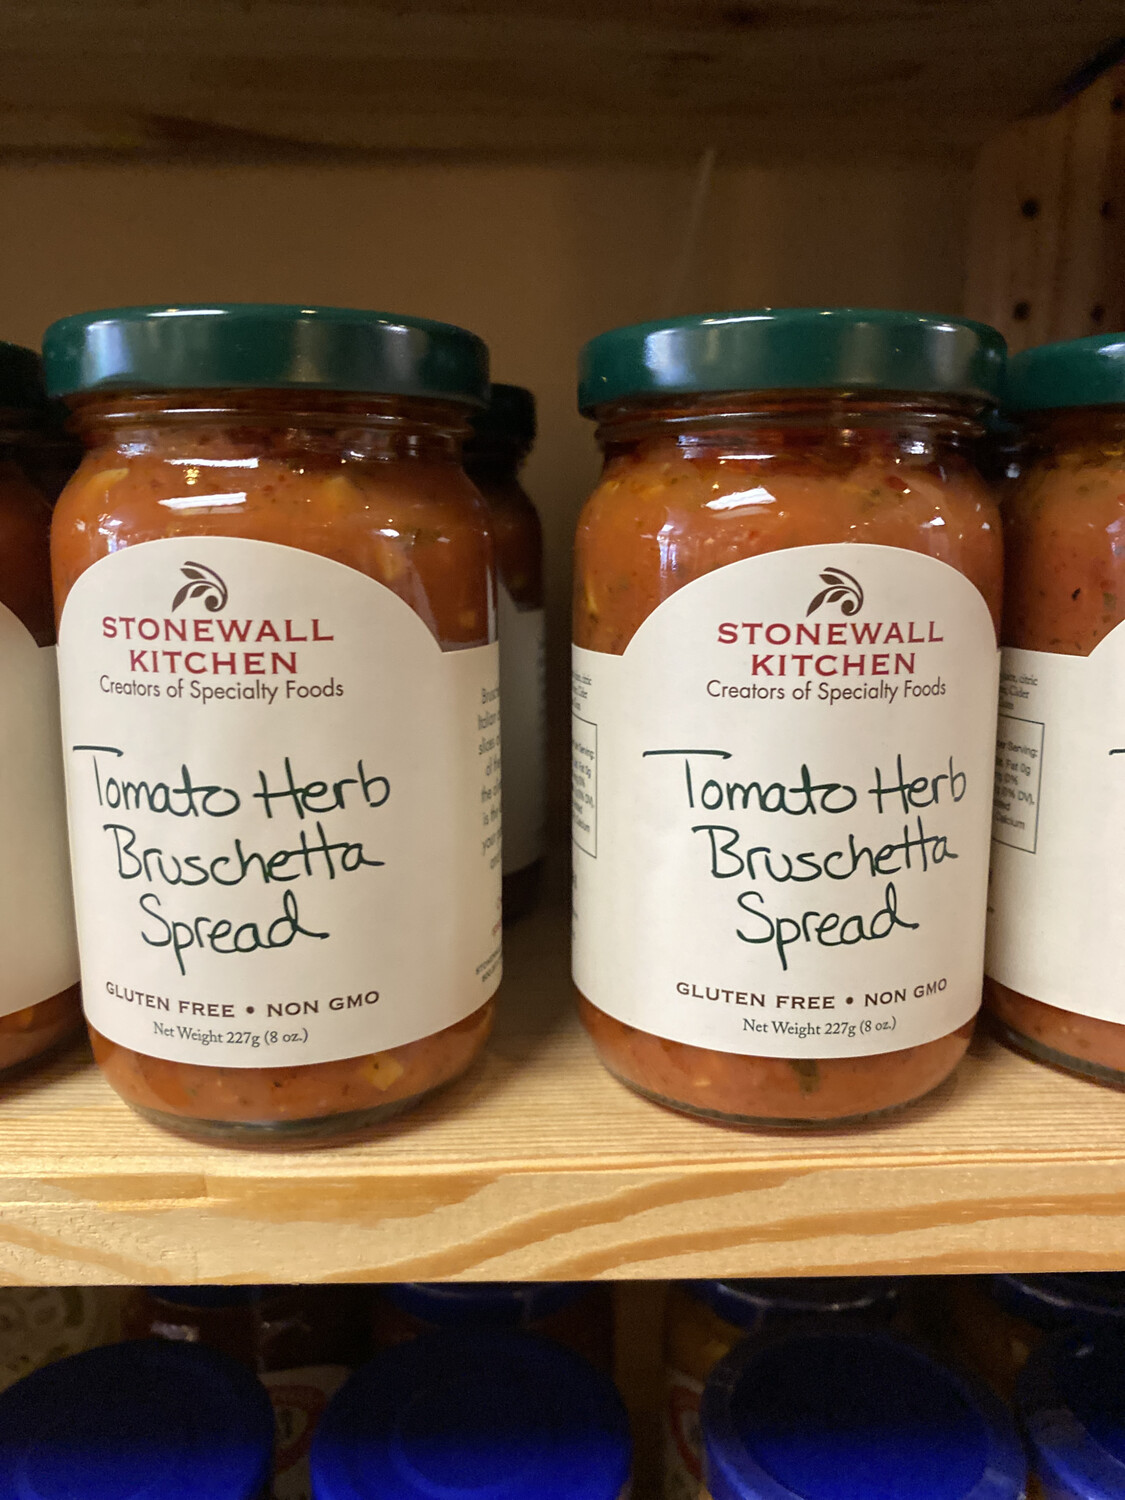 Stonewall Kitchens Tomato Herb Bruschetta Spread